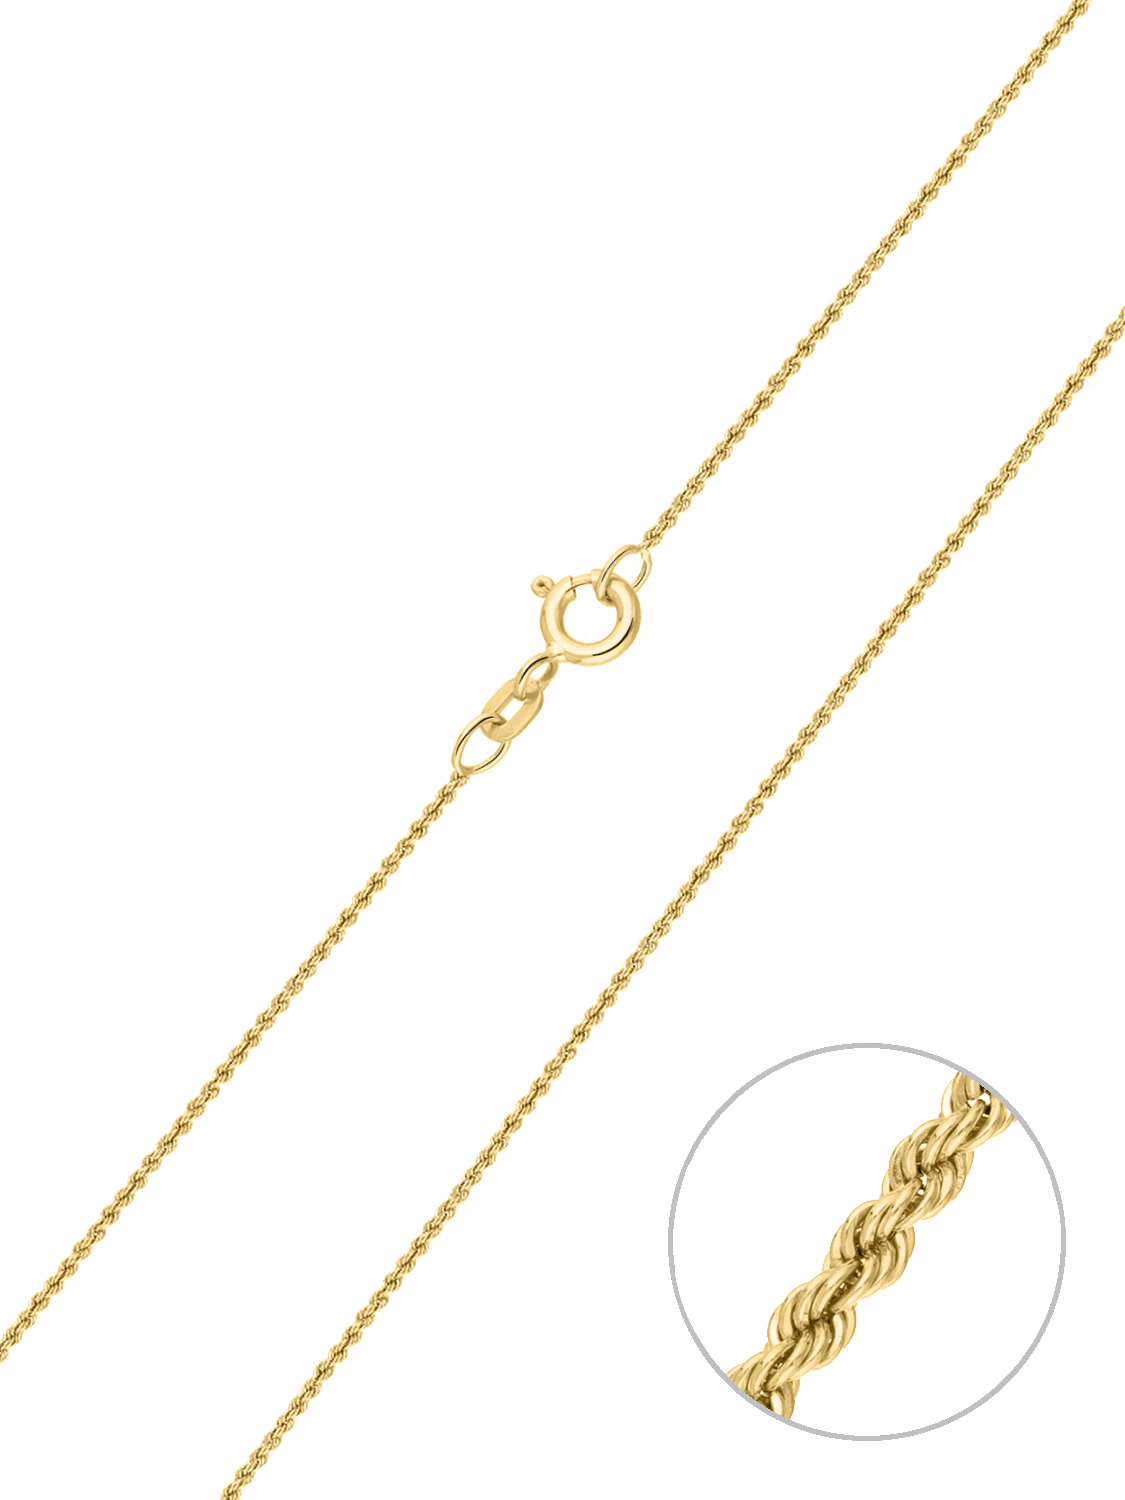 Dalmatia - Halskette 333 Gold Federring - Breite 1,4 mm - Länge 40 cm